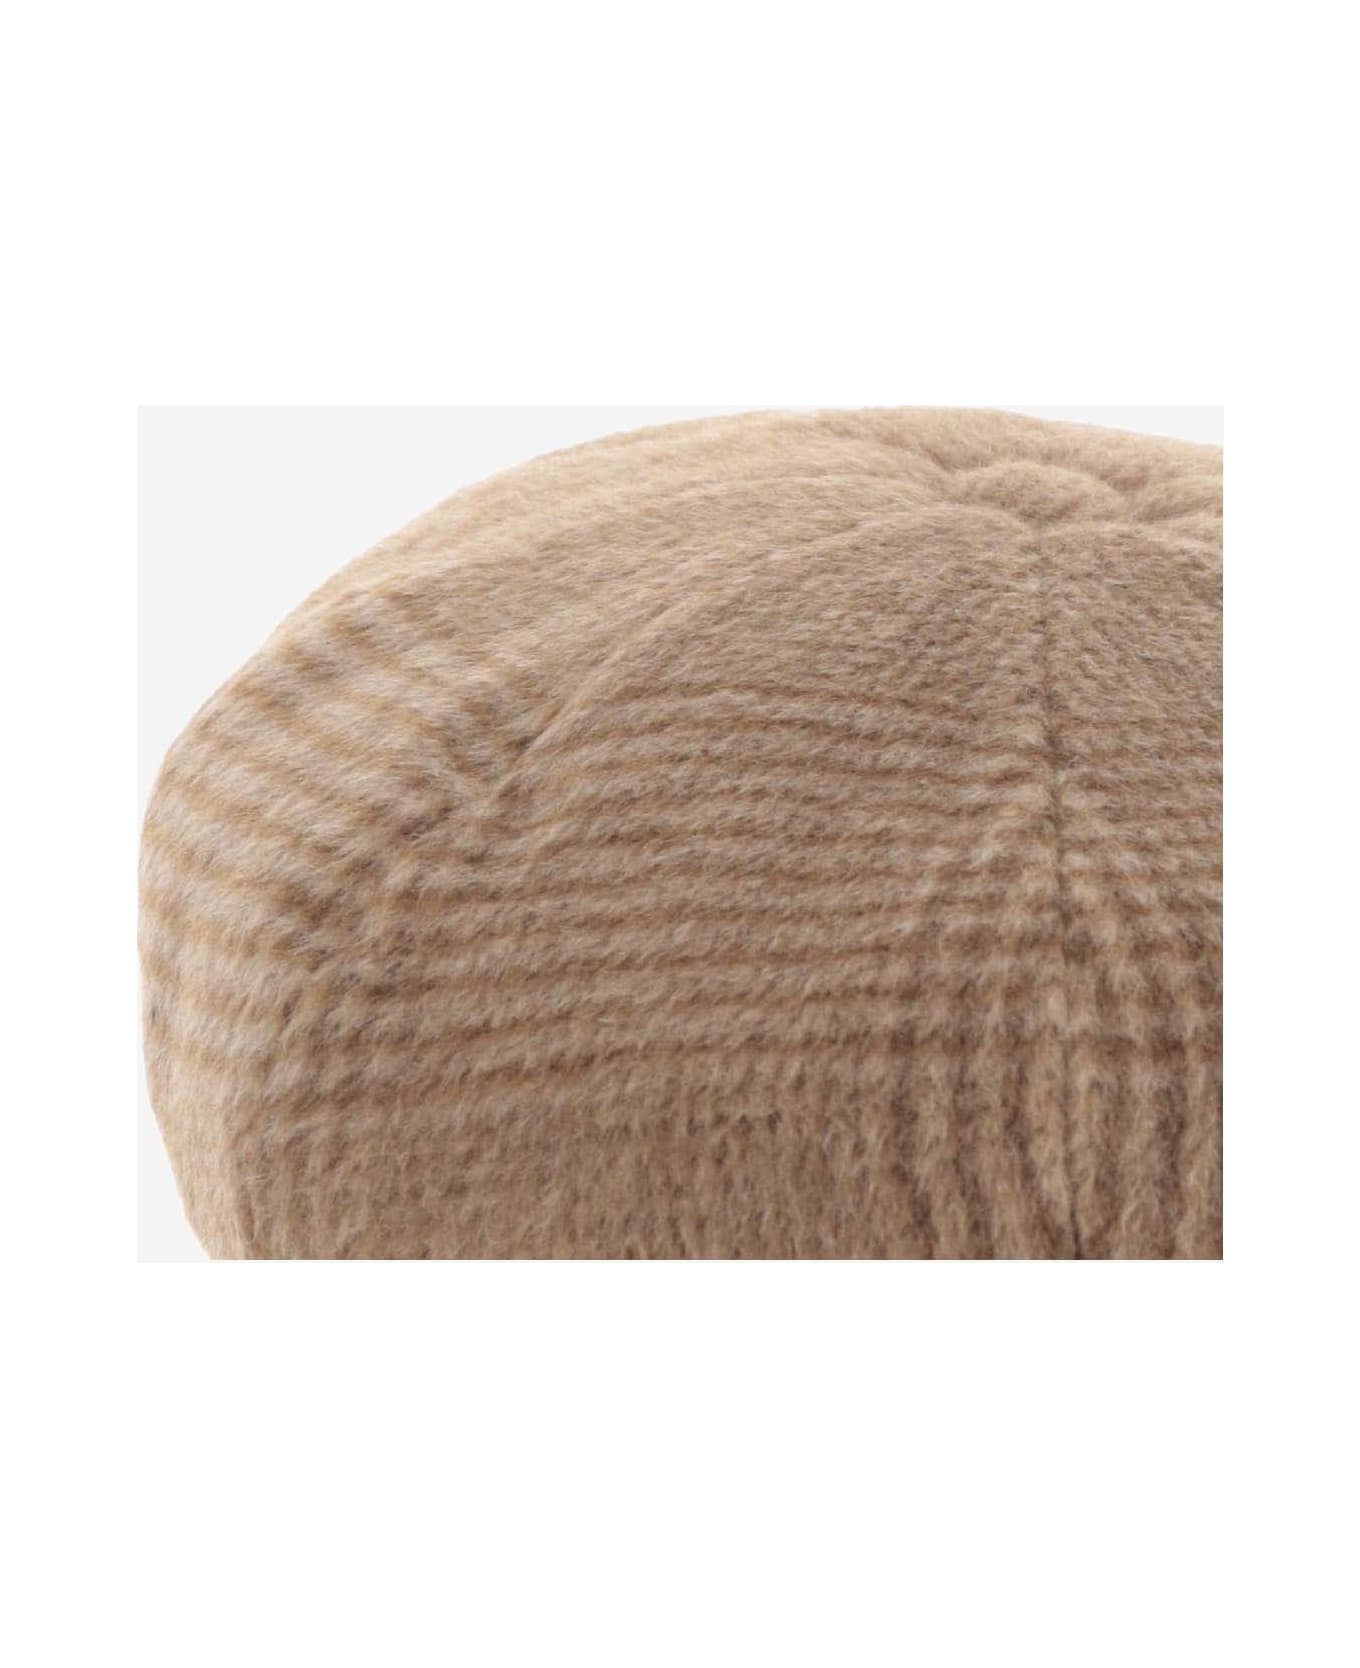 Stetson Wool And Alpaca Blend Cap - Brown